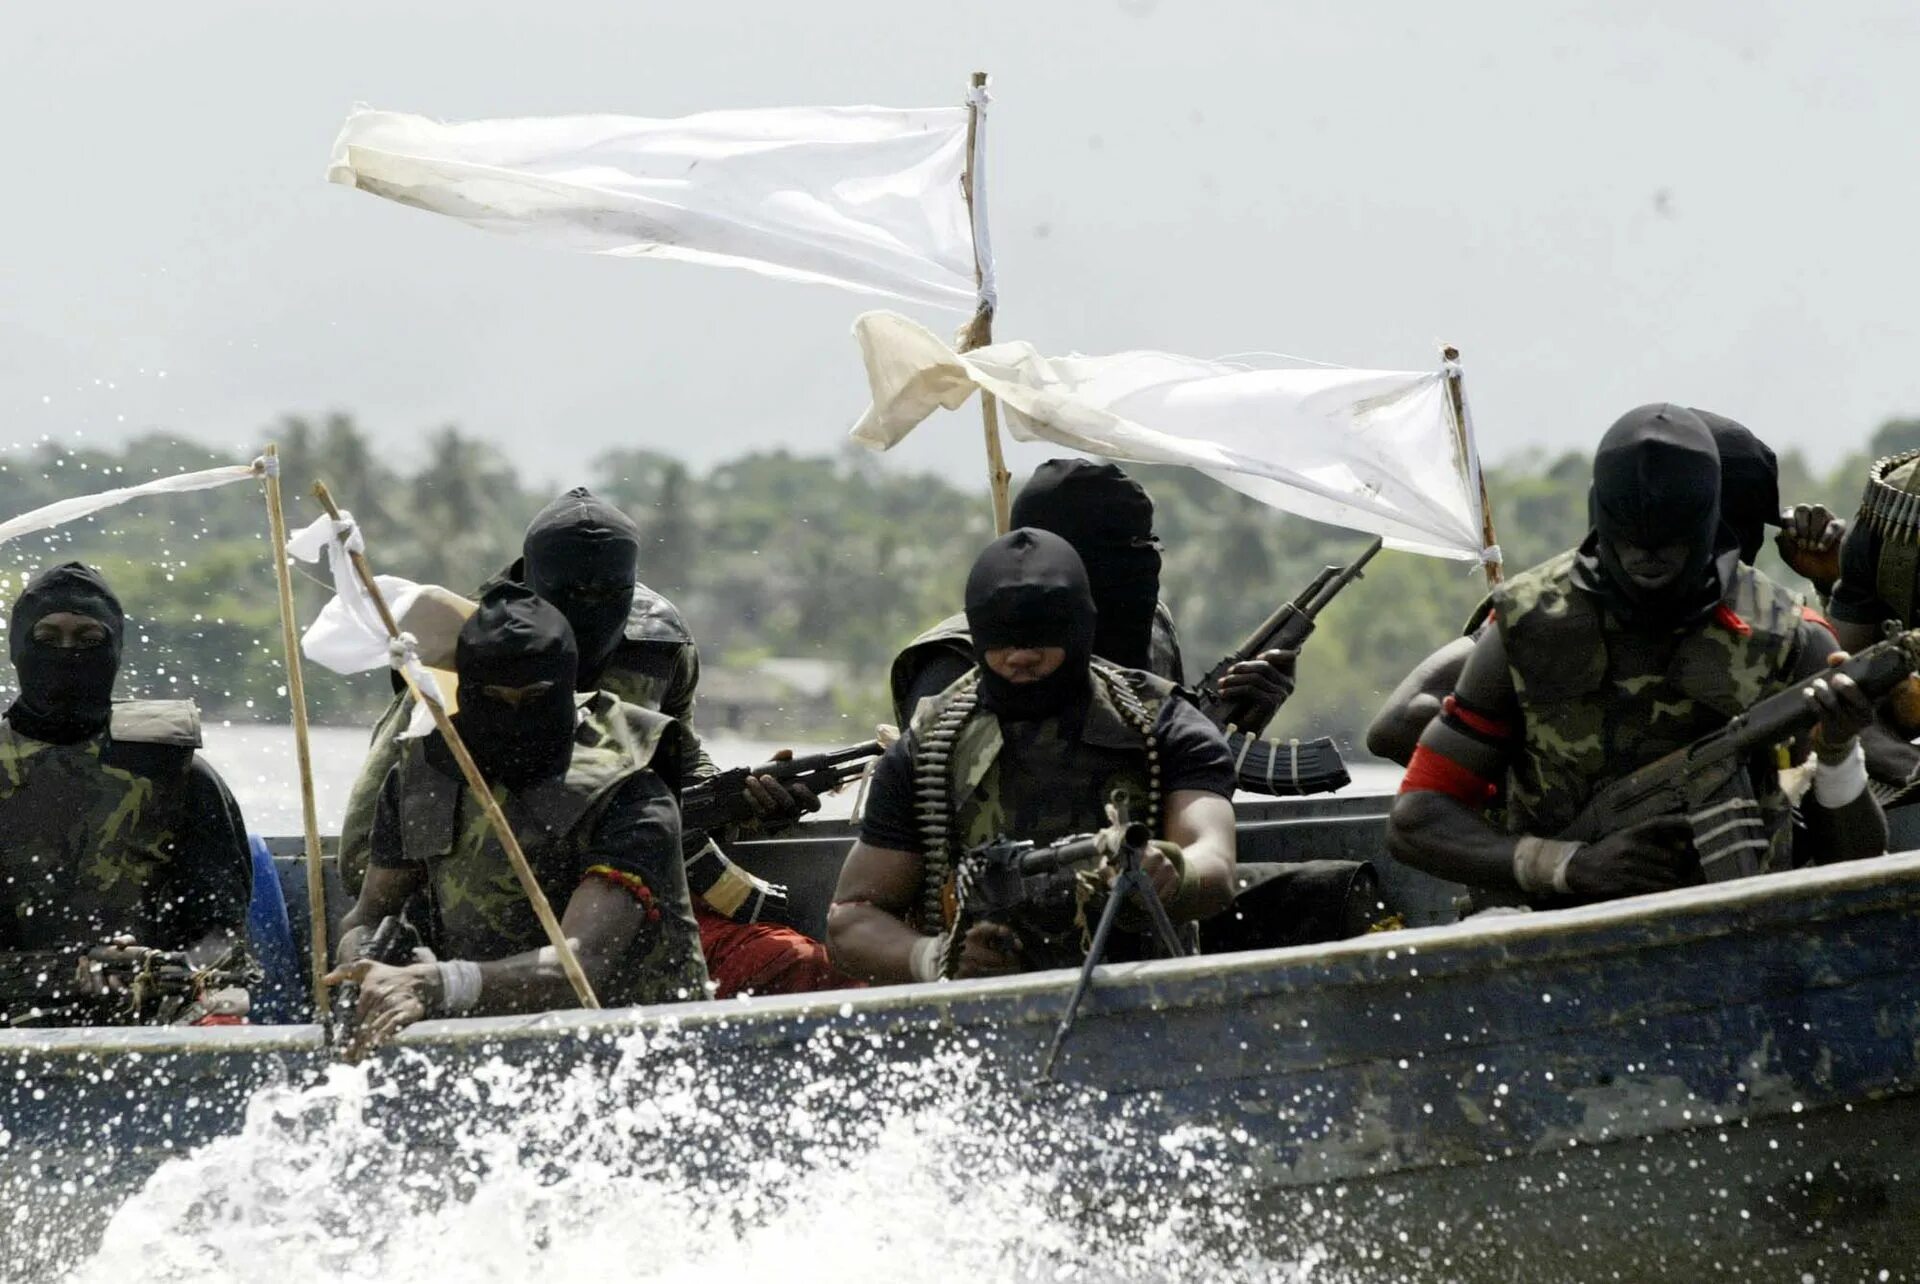 Нападение пиратов. Сомалийские пираты 2008. Нападение сомалийских пиратов. Нигерийские пираты. Пираты современности.